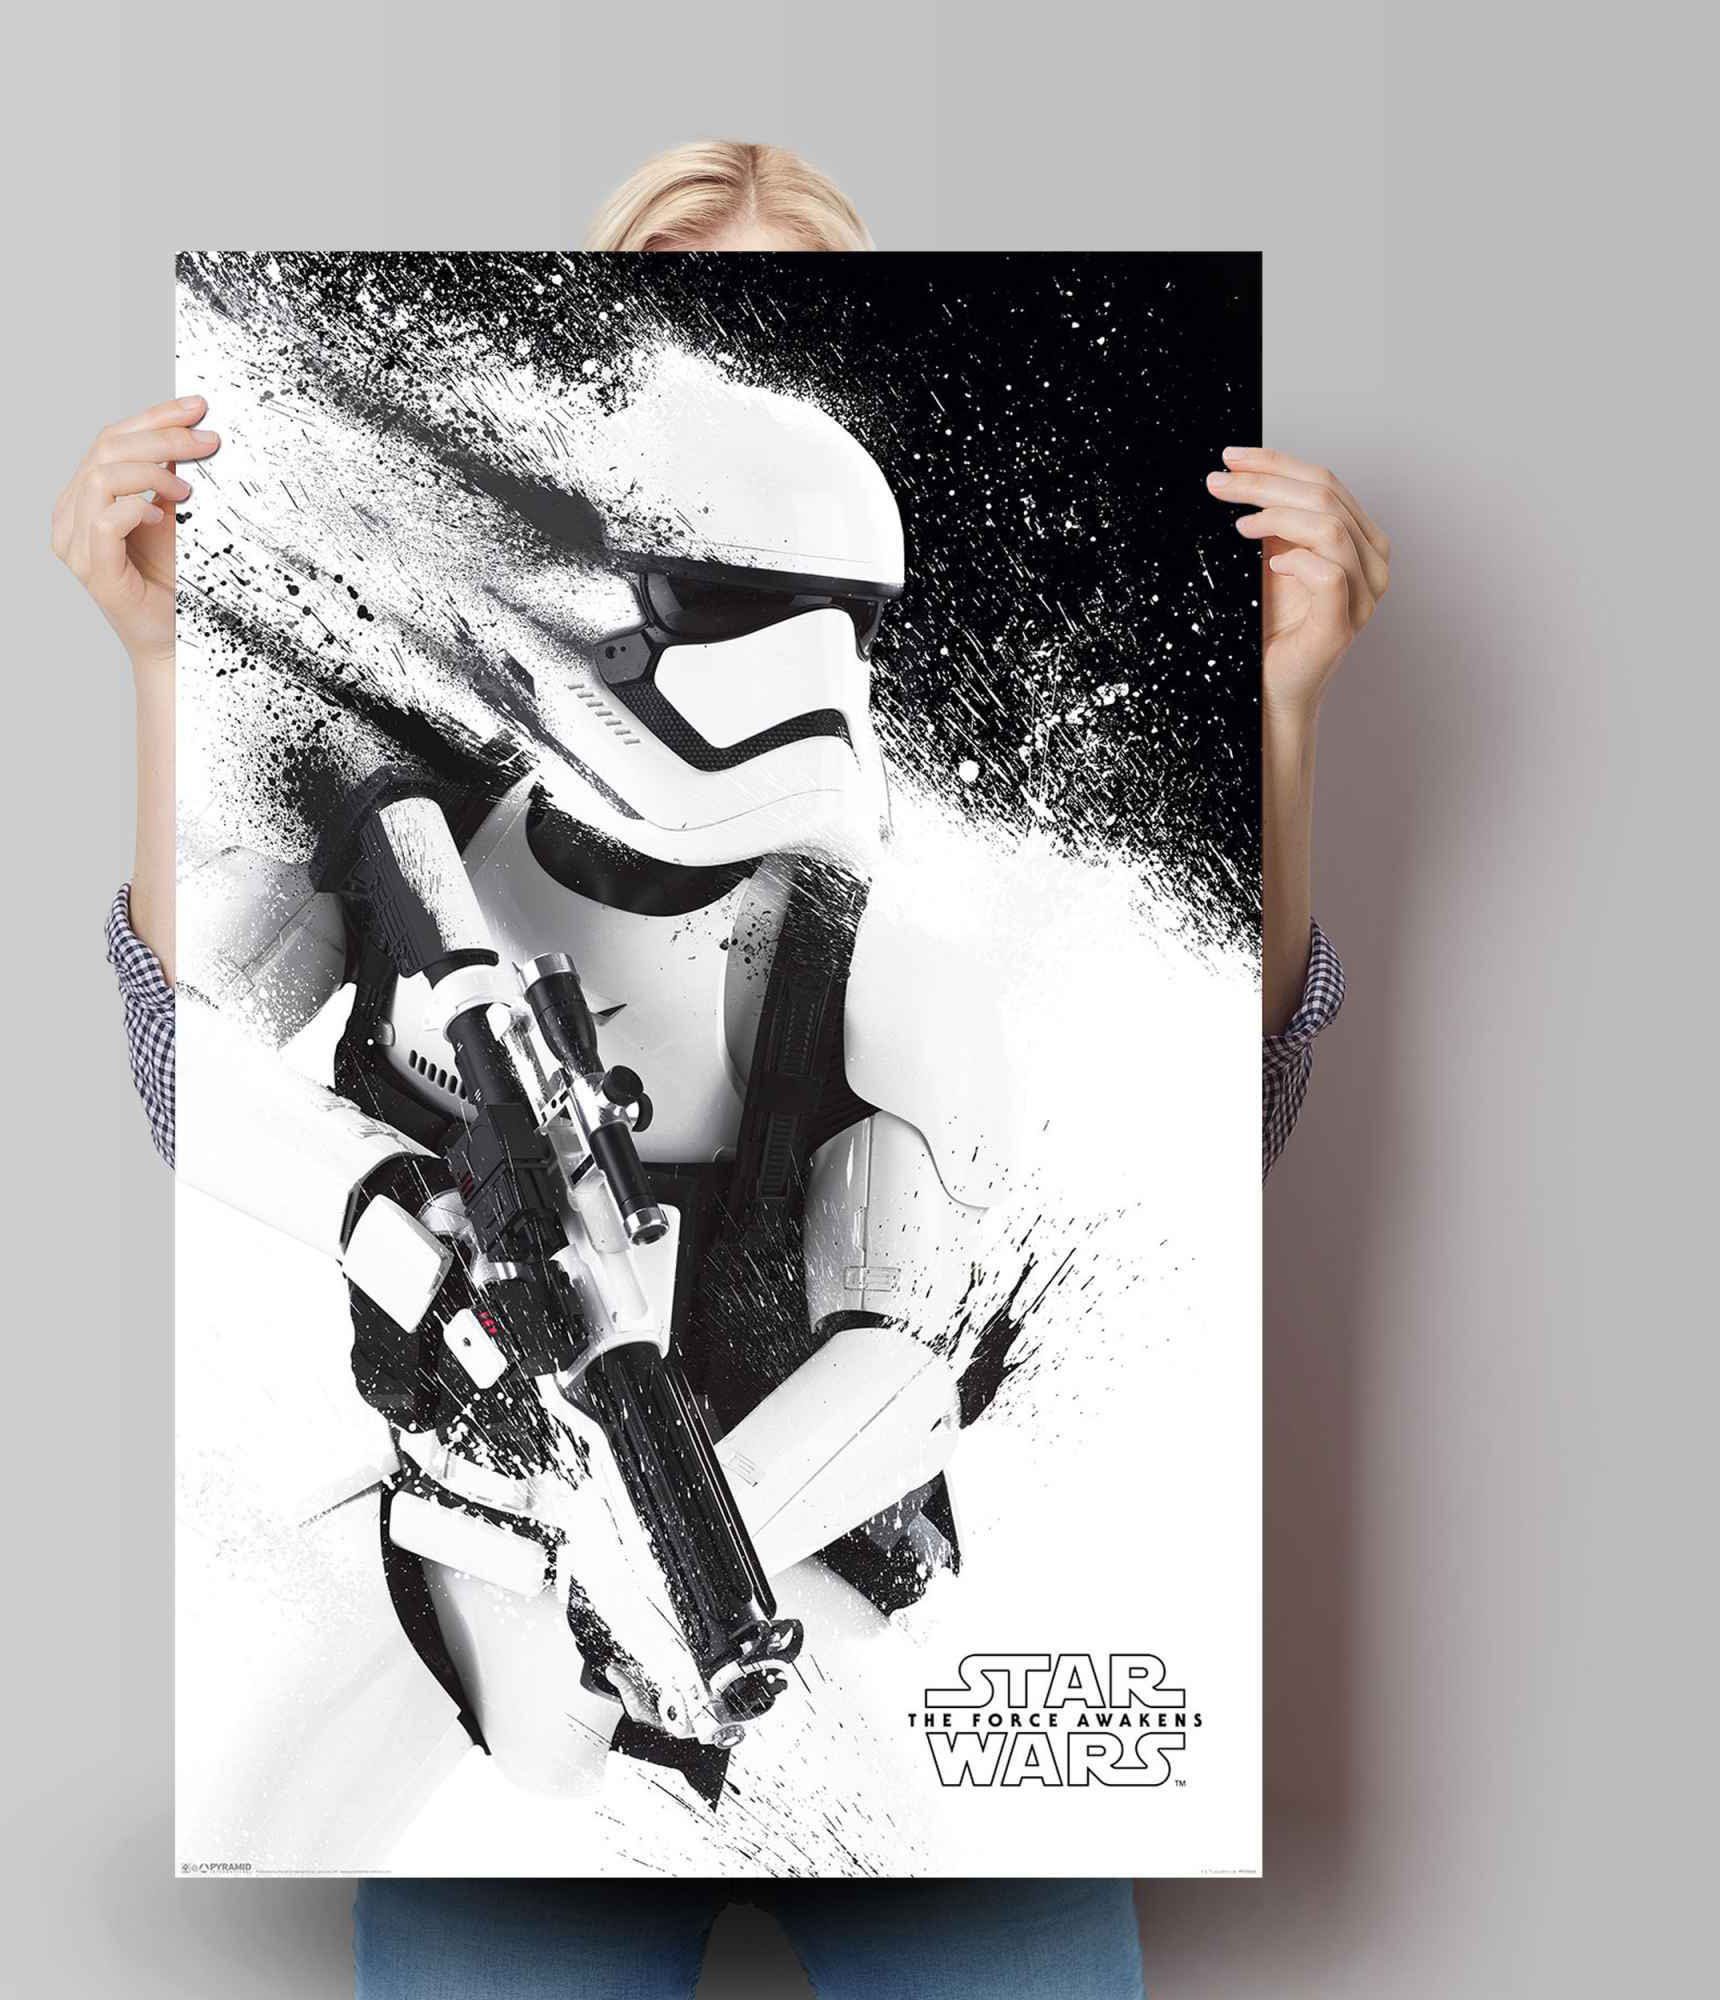 Science-Fiction Star Wars (1 VII Episode Stormtrooper, St) Poster Reinders! Poster